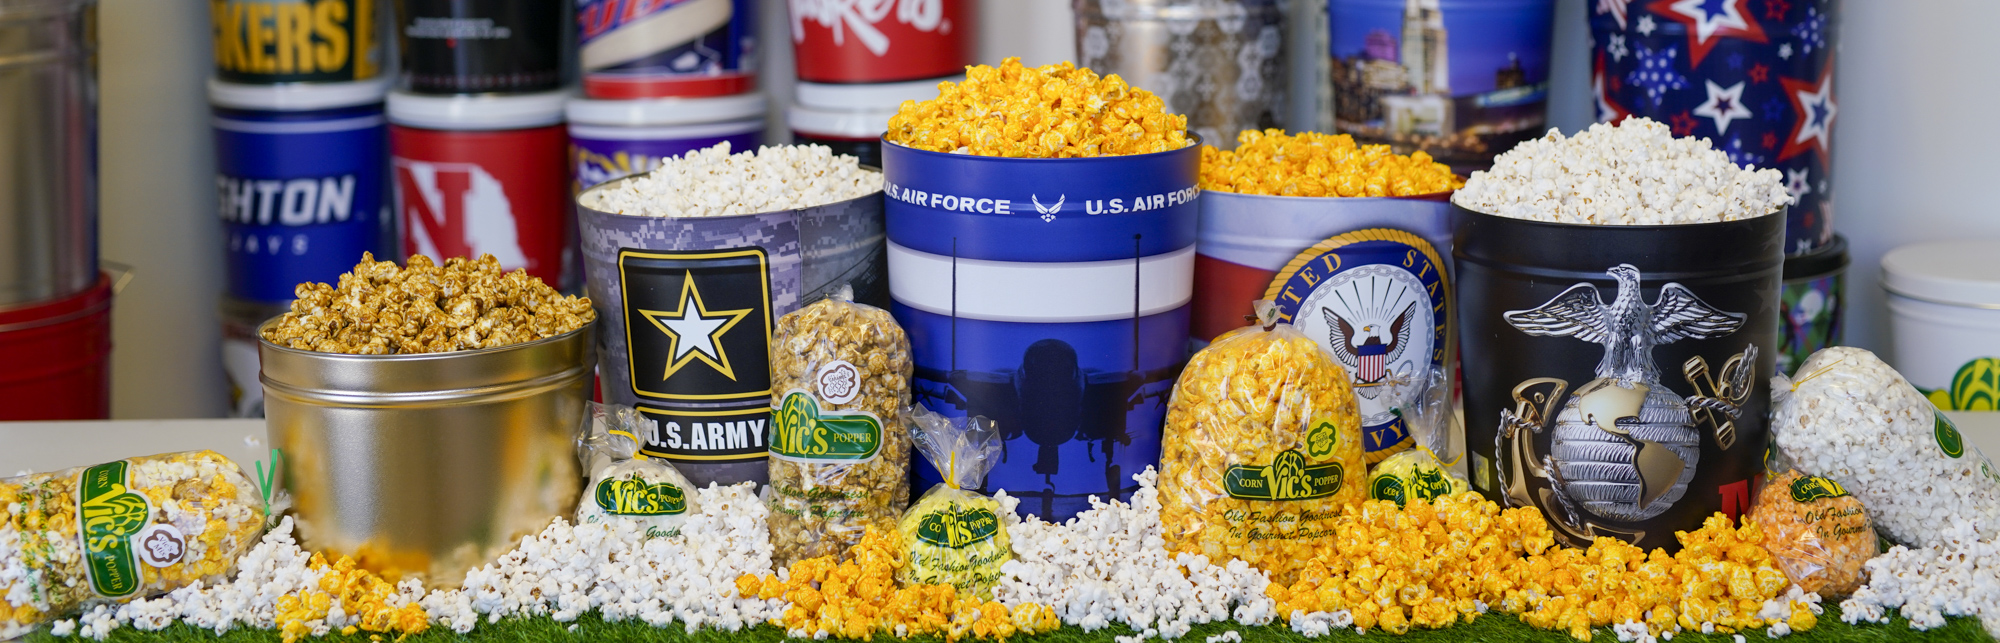 military-army-navy-air-force-marines-themed-slider-cropped-vics-popcorn.jpg